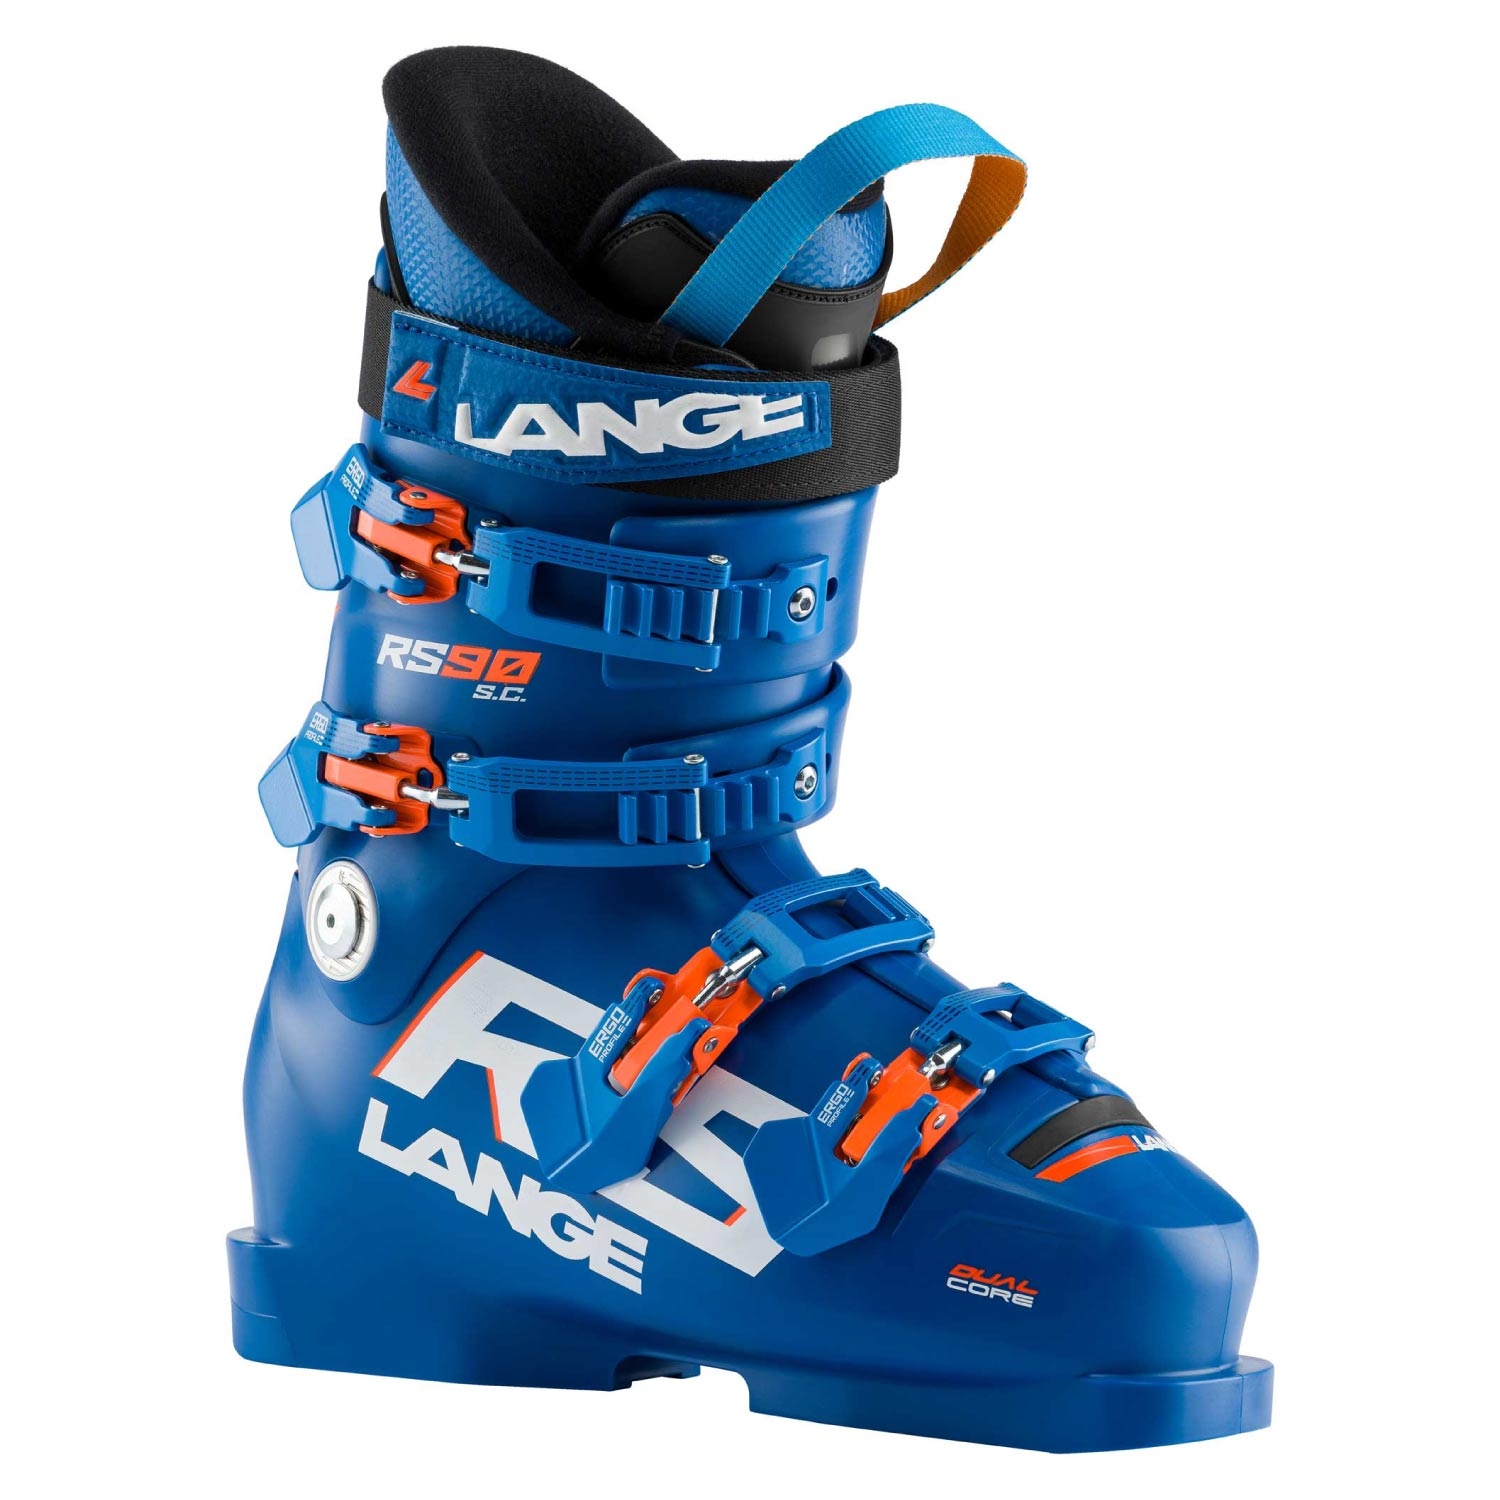 Lange RS 90 S C Ski Boots Power Blue 2021